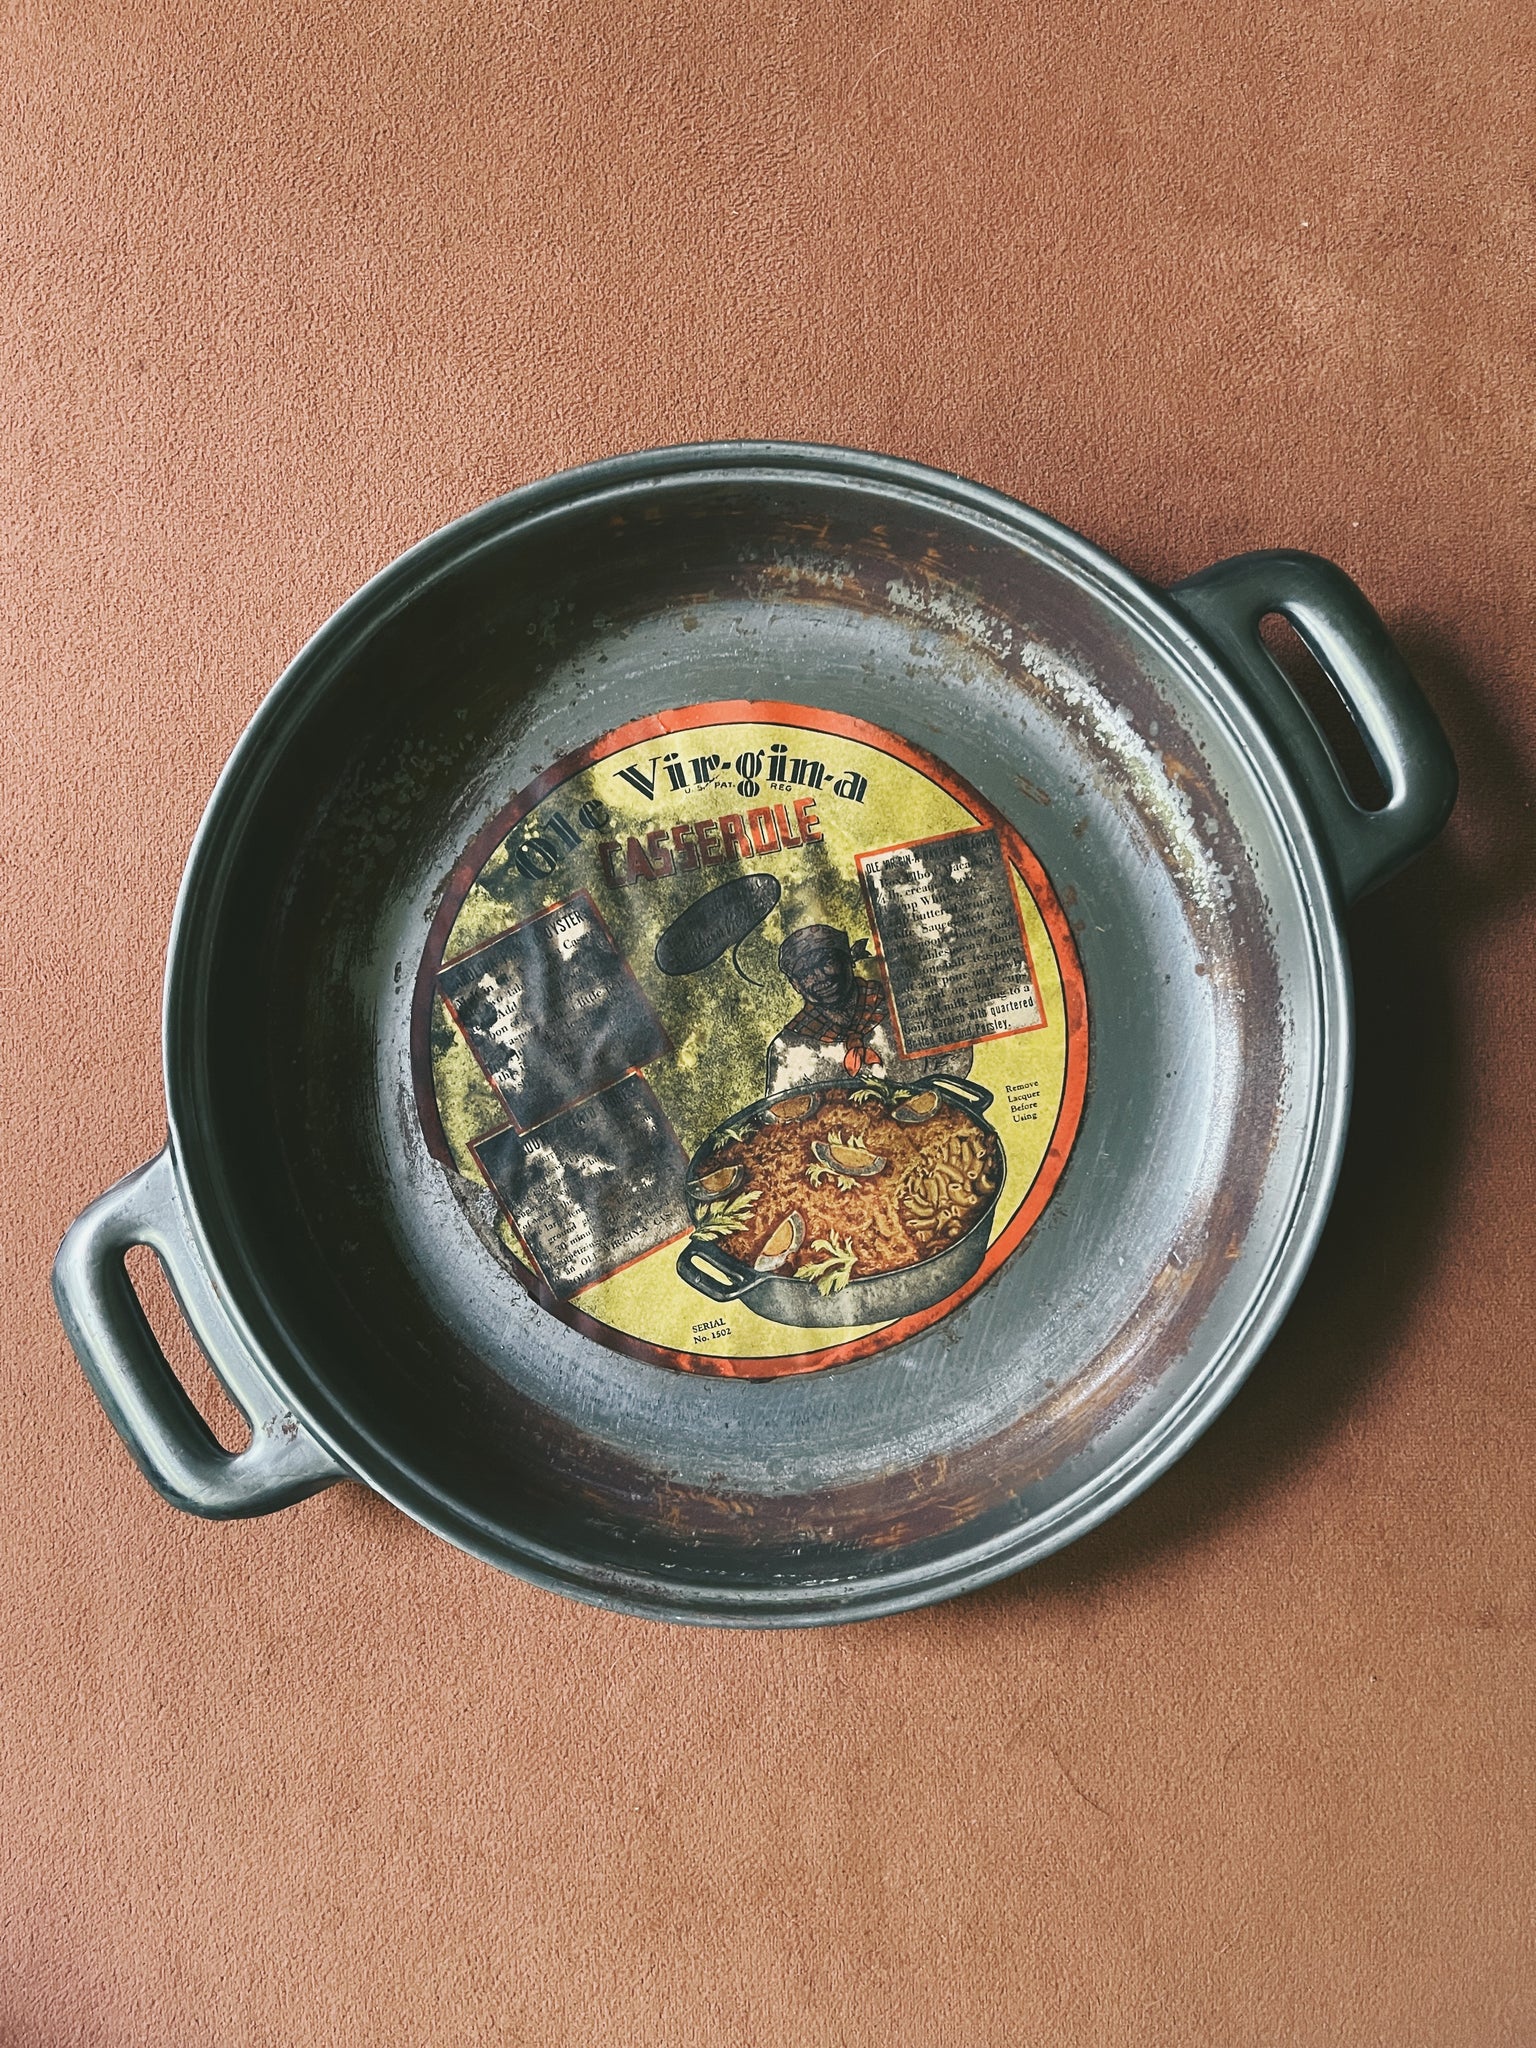 Antique Rare Ole Vir-gin-a Casserole Baking Pan (1930's-40's)